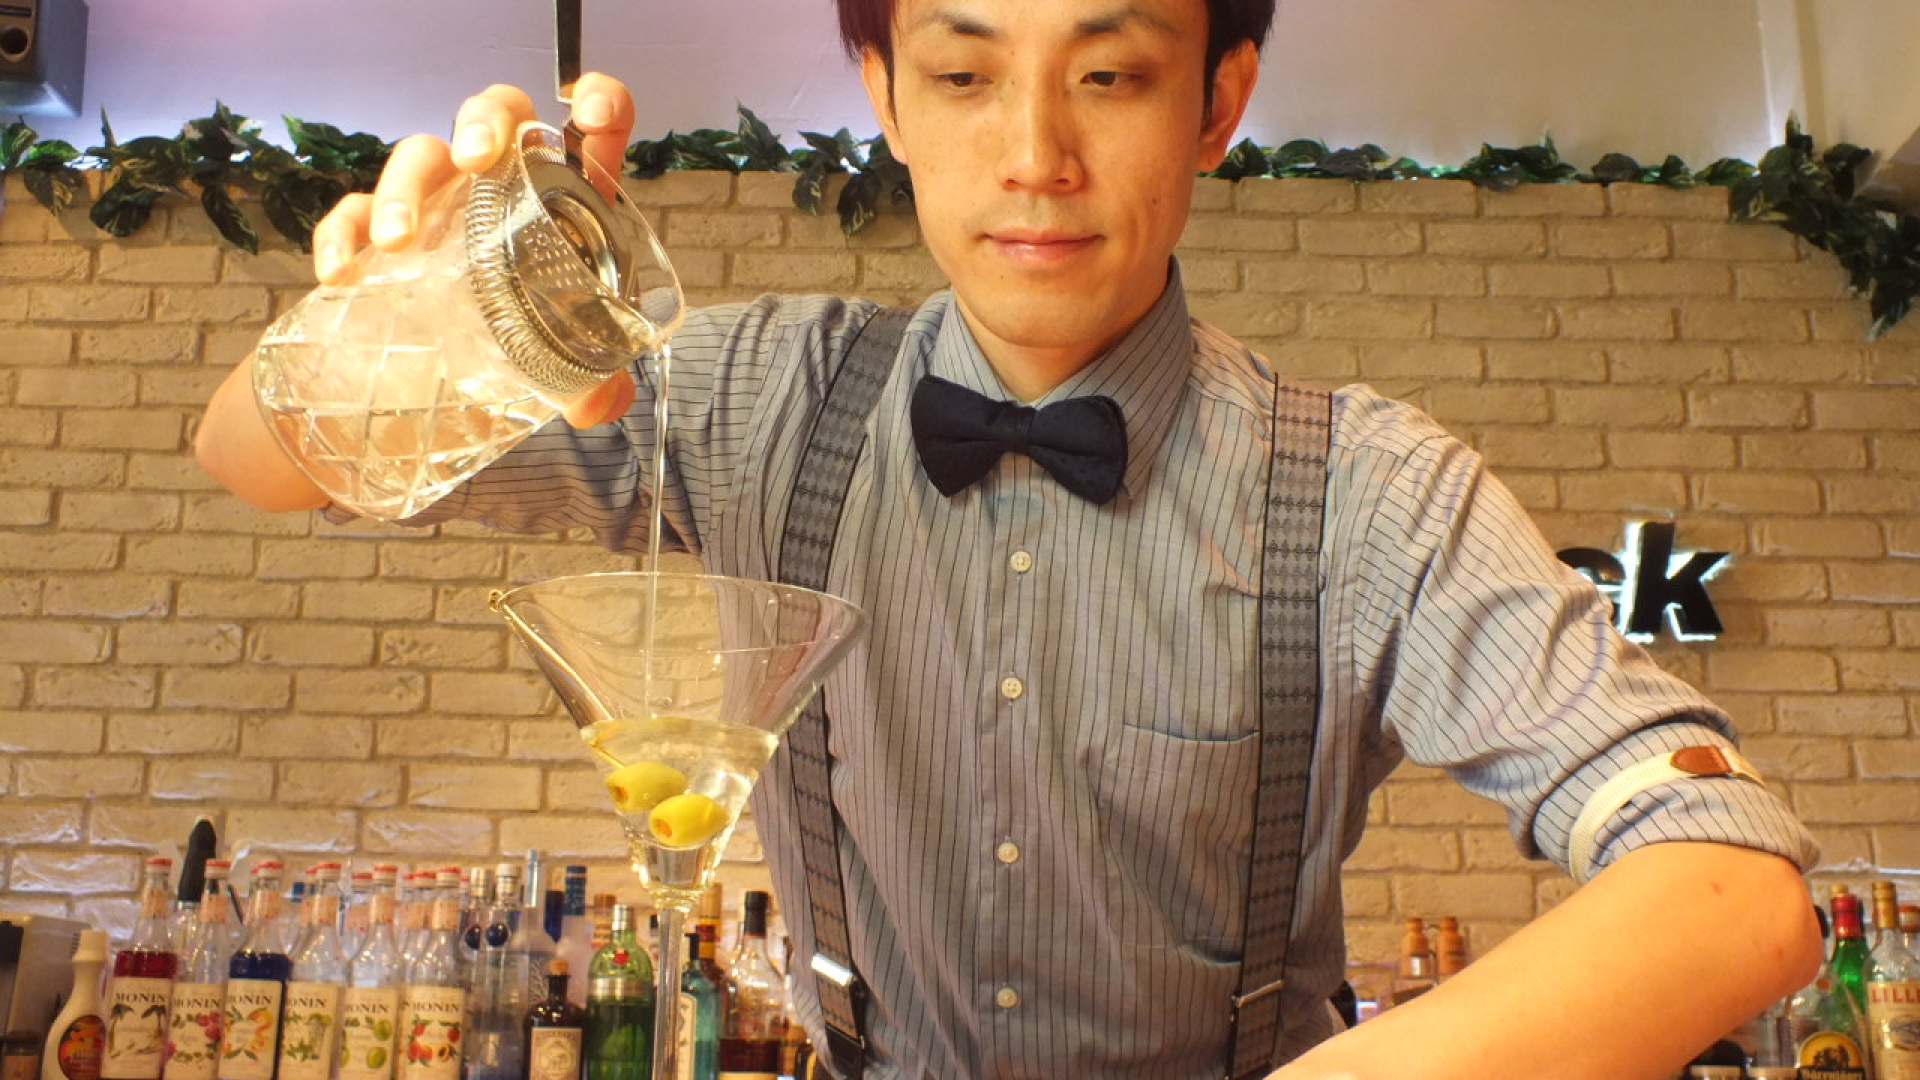 Spectacle de jonglages "cocktails" (Jun Nakamura)